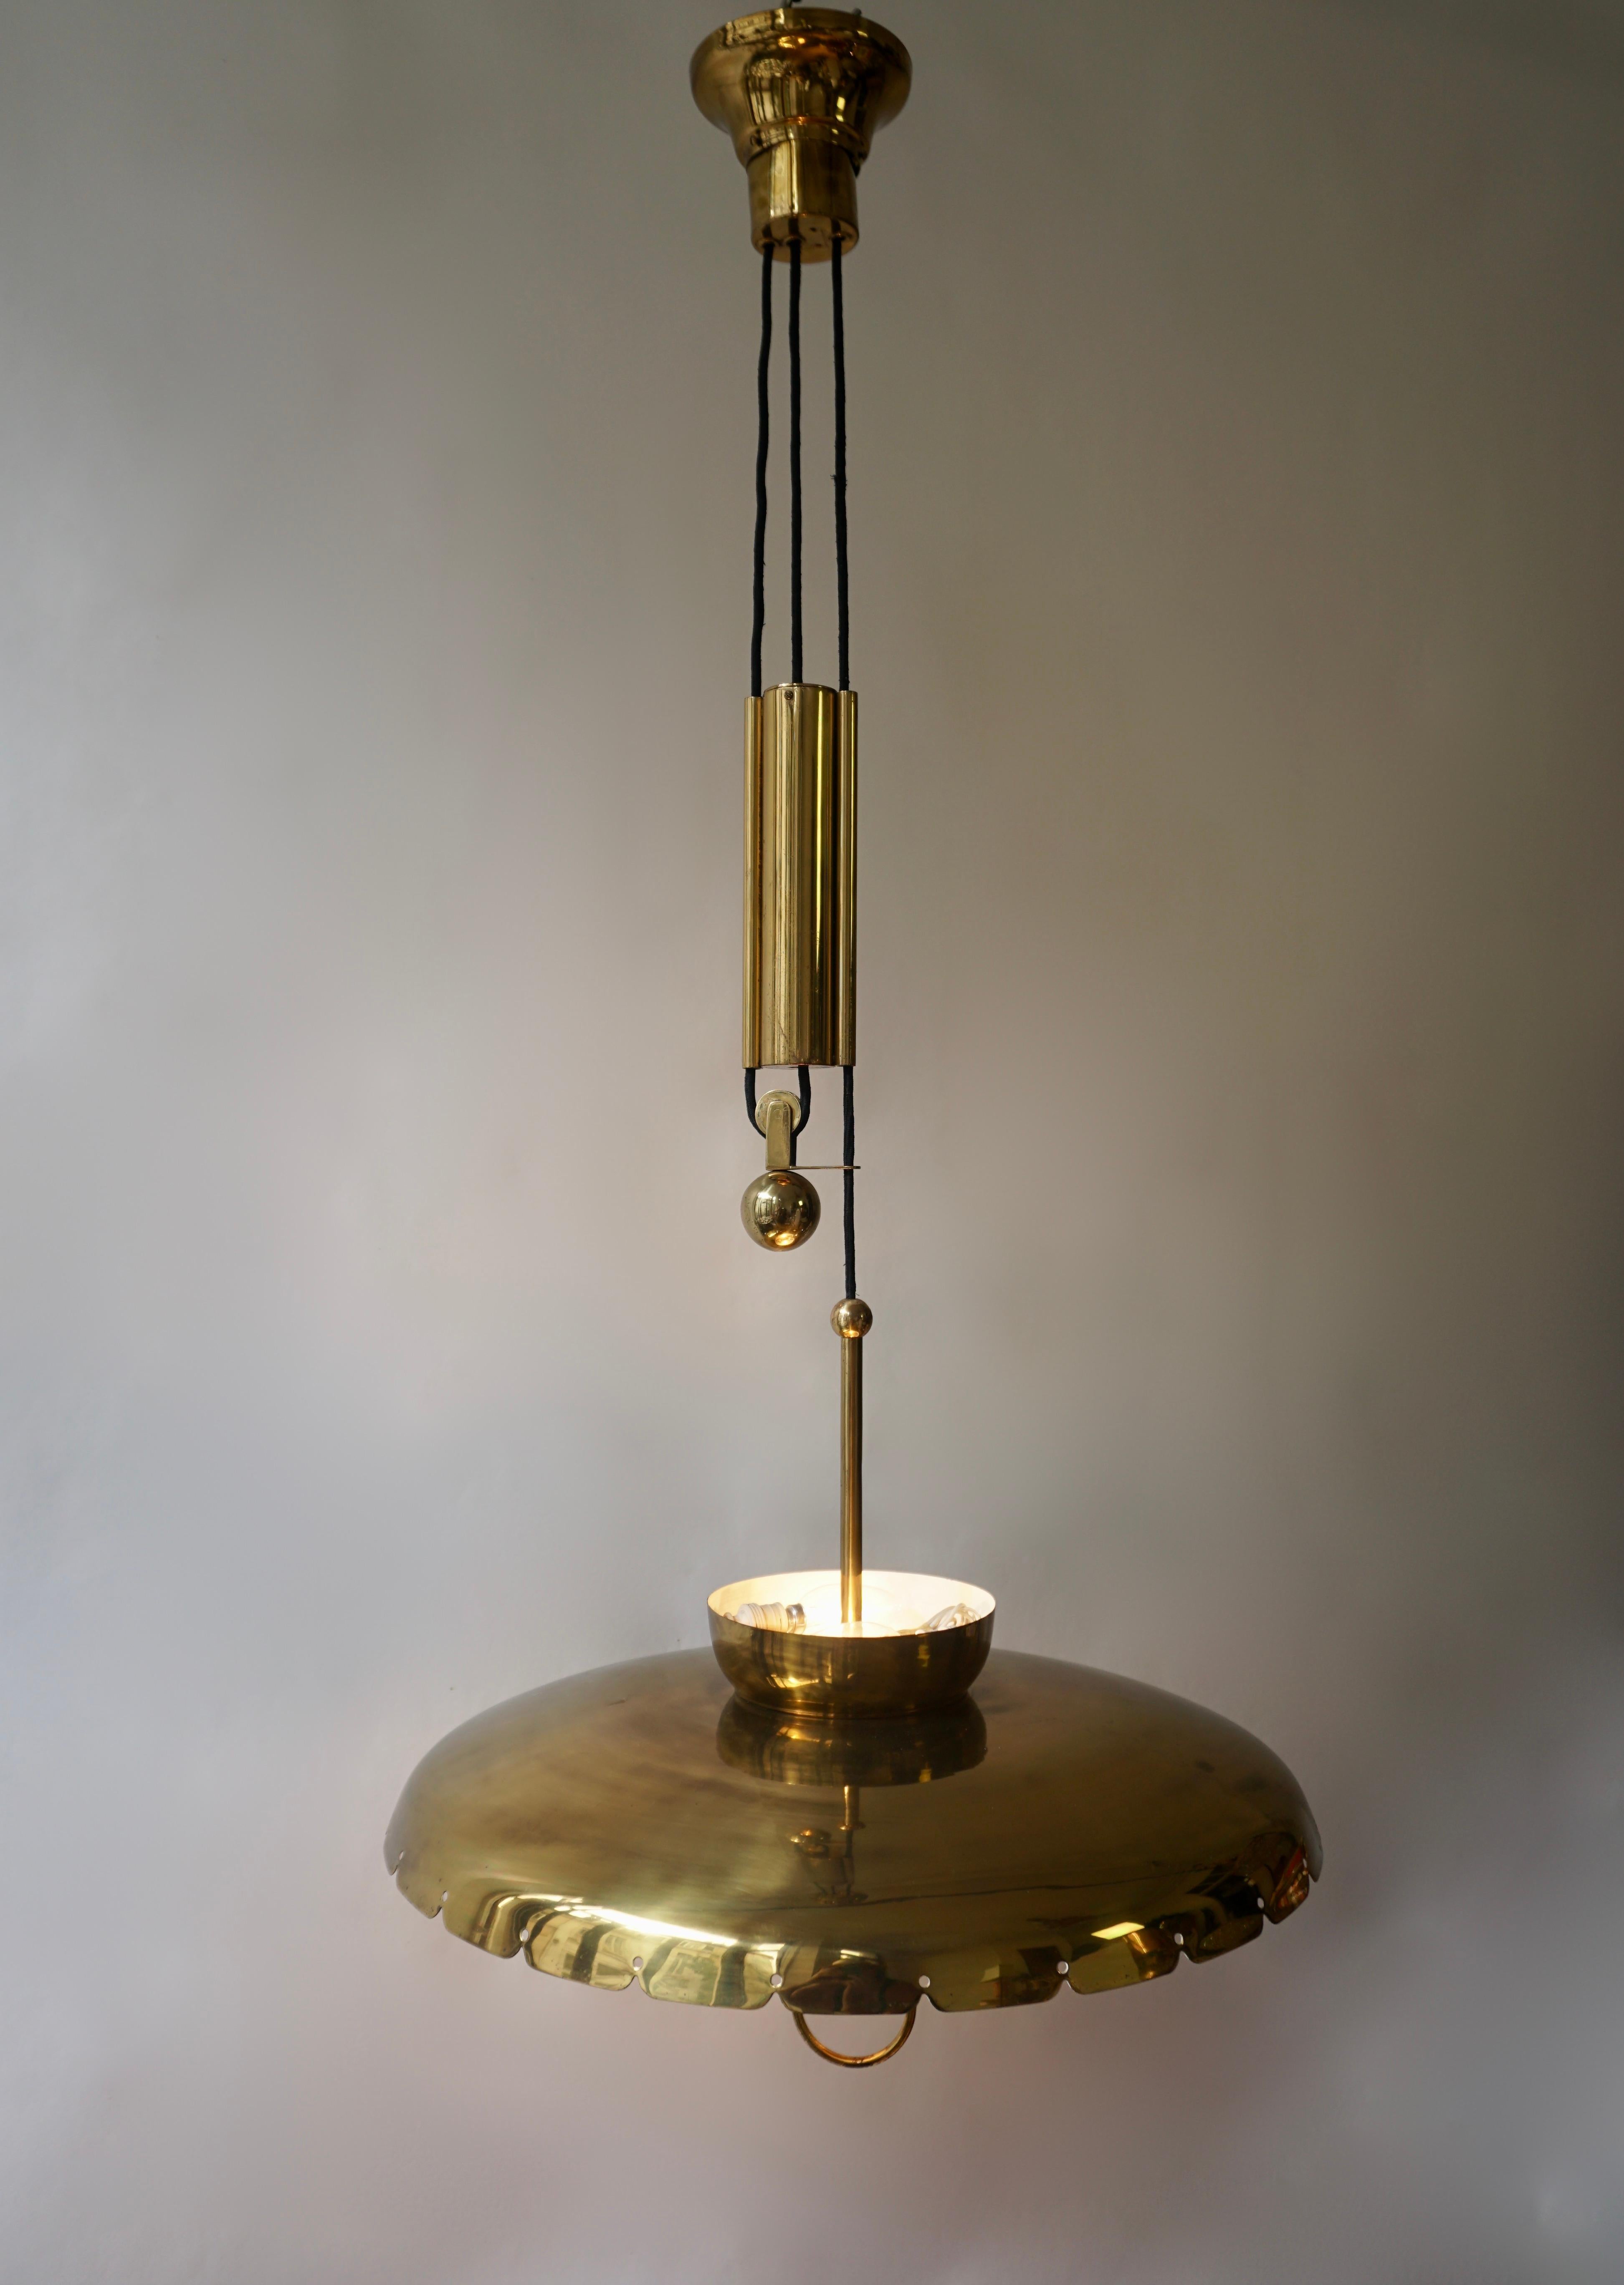 Italian Midcentury Adjustable Counterweight Brass and Glass Pendant Lamp, 1960s 1970s